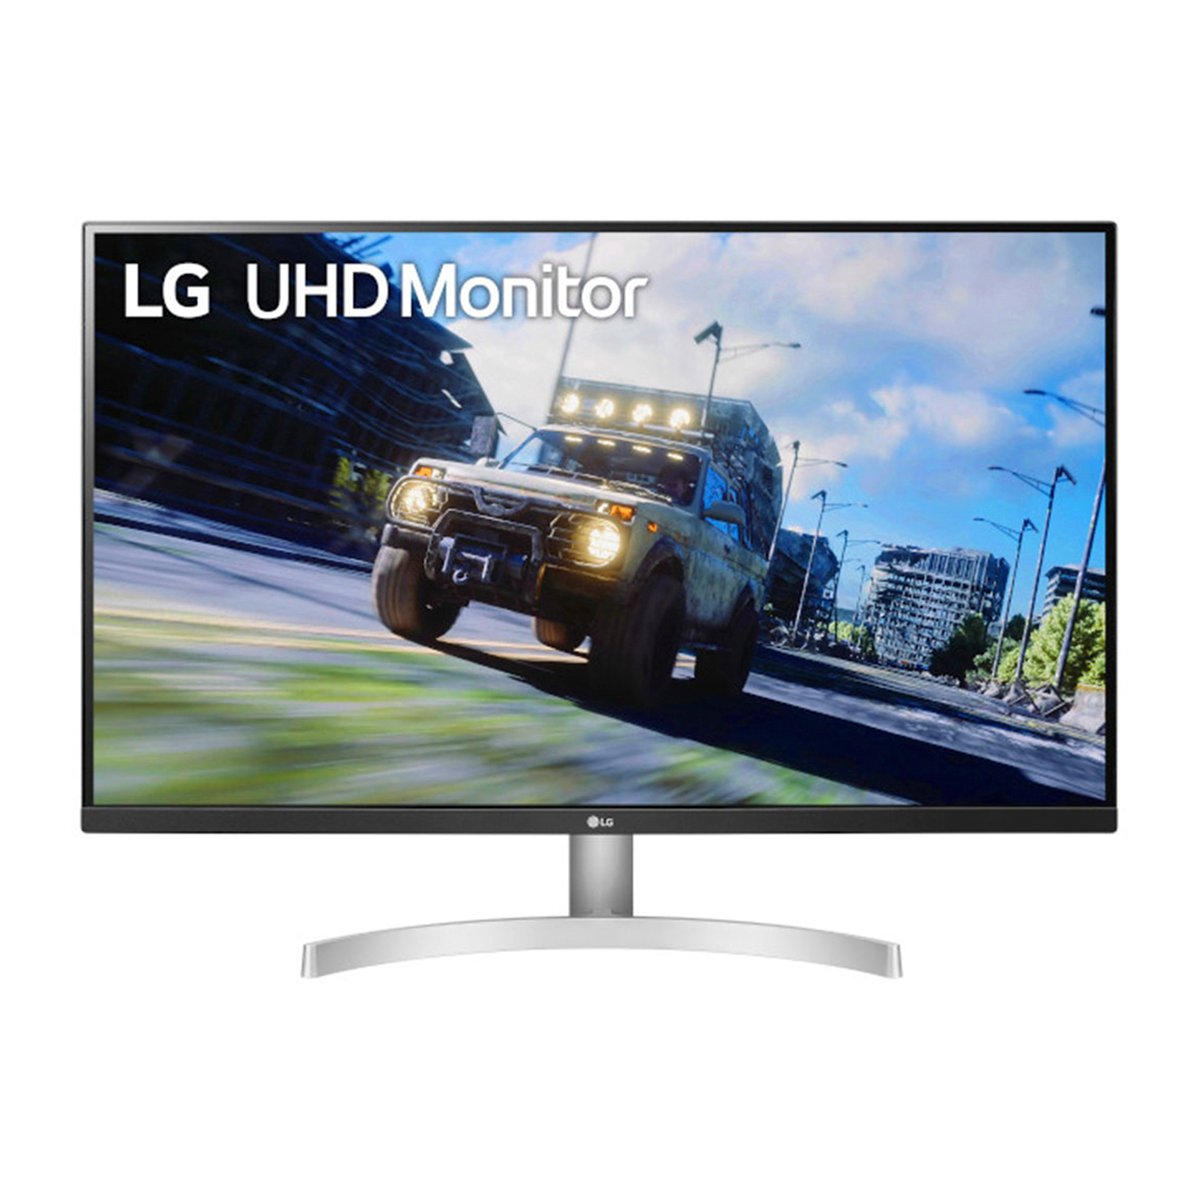 LG 32UN500-W 32'' UHD HDR Monitor with FreeSync